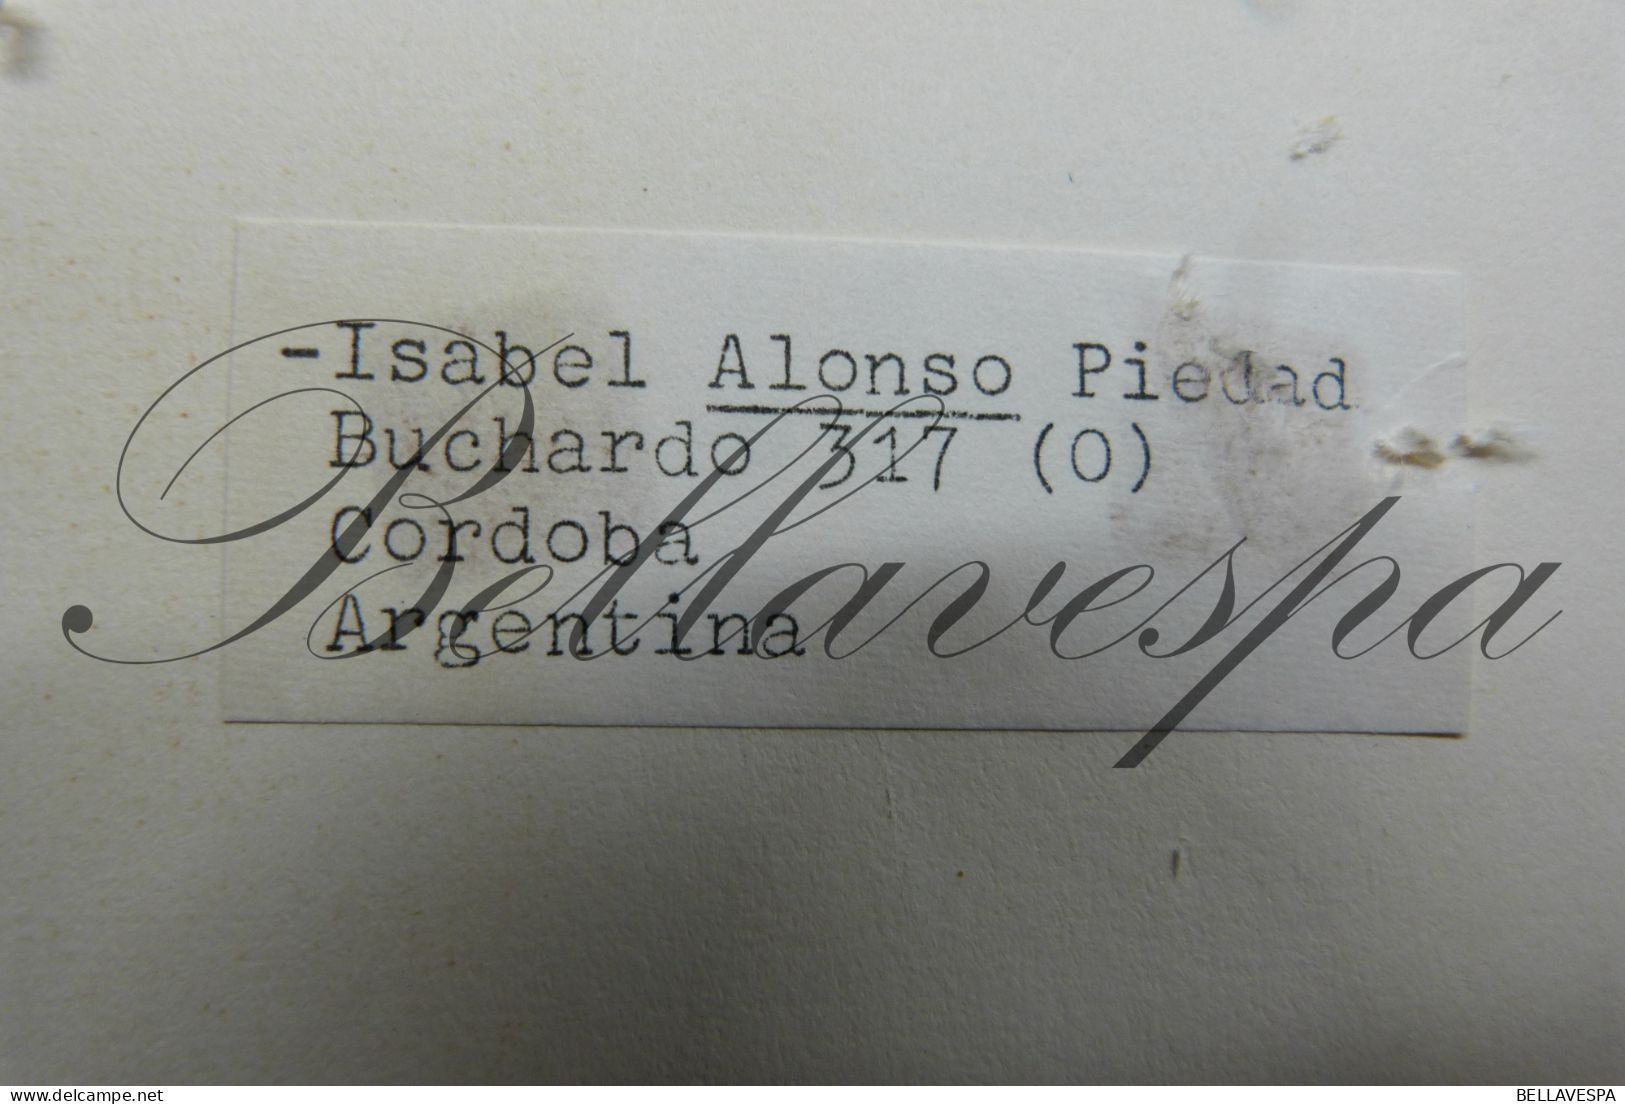 Isabel ALONSO PIEDAD Cordoba Argentina Buchardo 317.Healt Development Research Amst. Leiden Antw 1971-72 - Genealogia